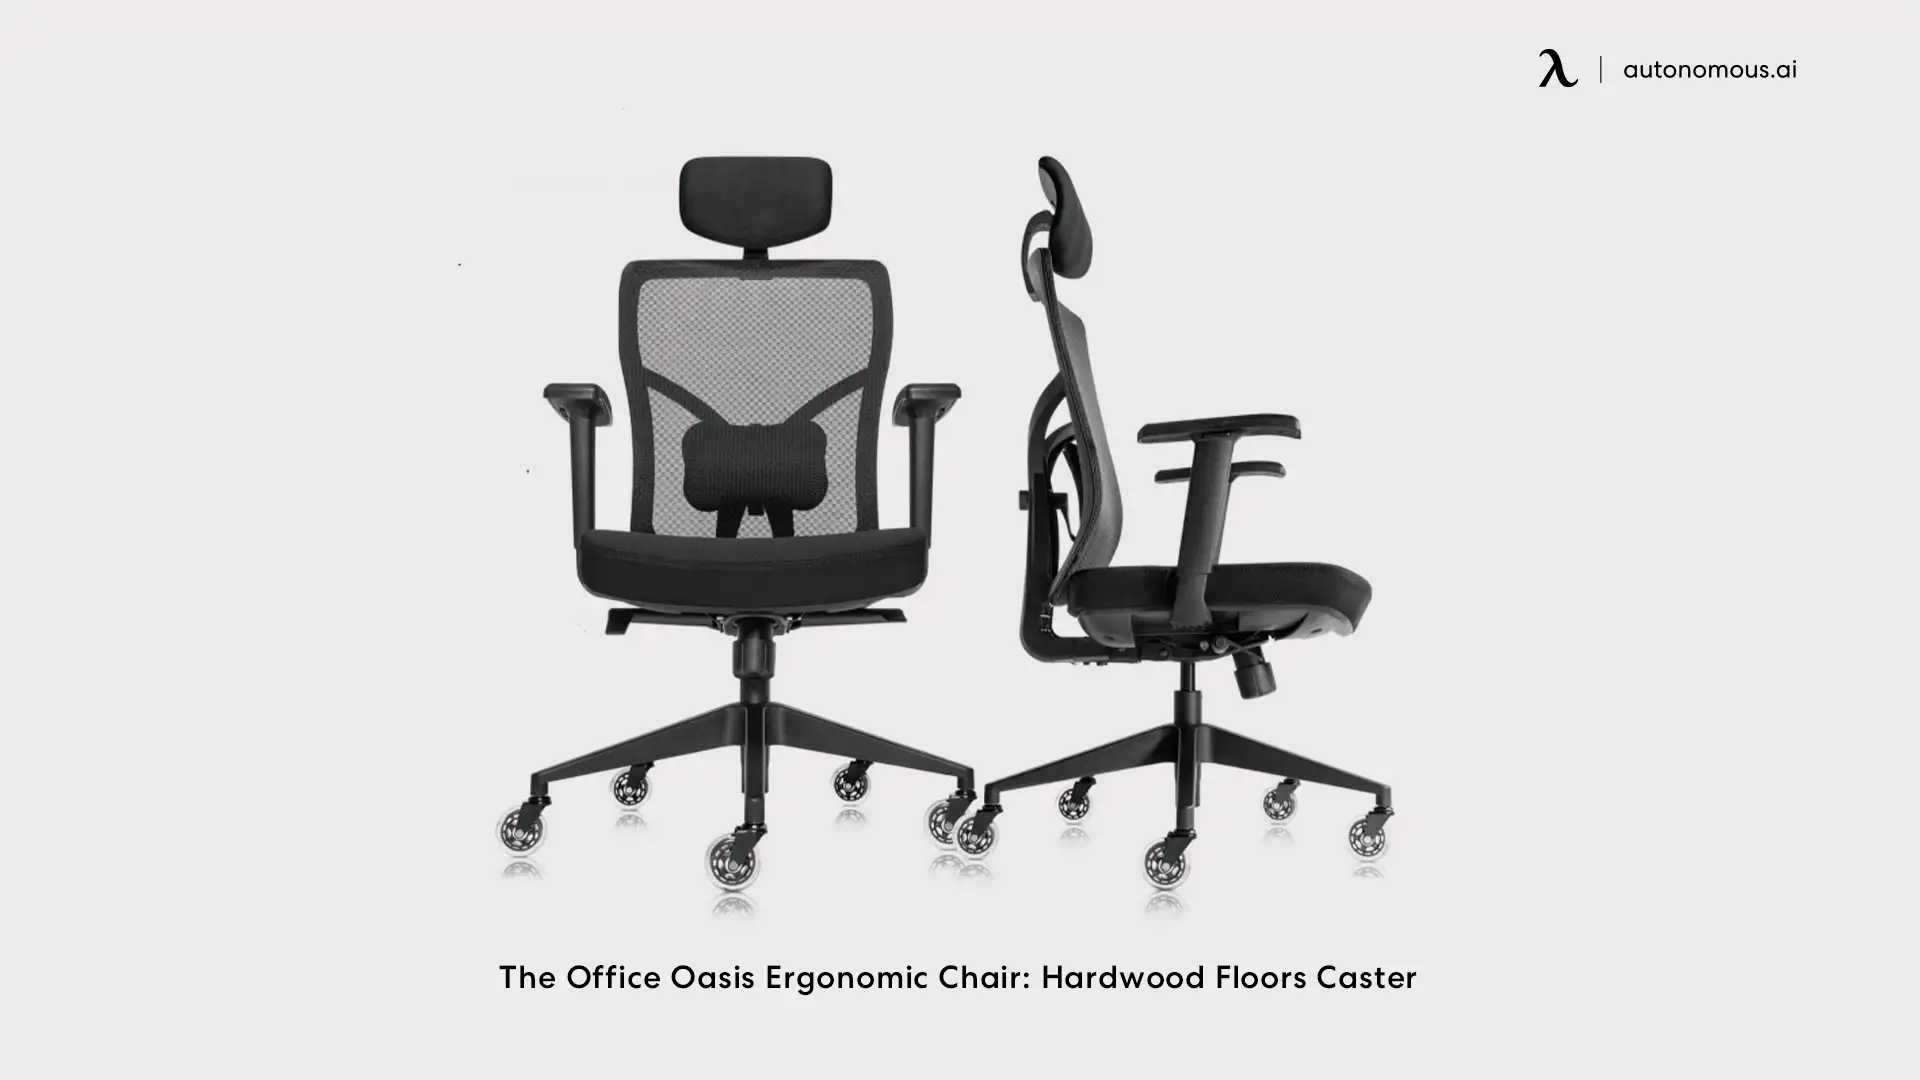 The Office Oasis Ergonomic Chair: Hardwood Floors Caster